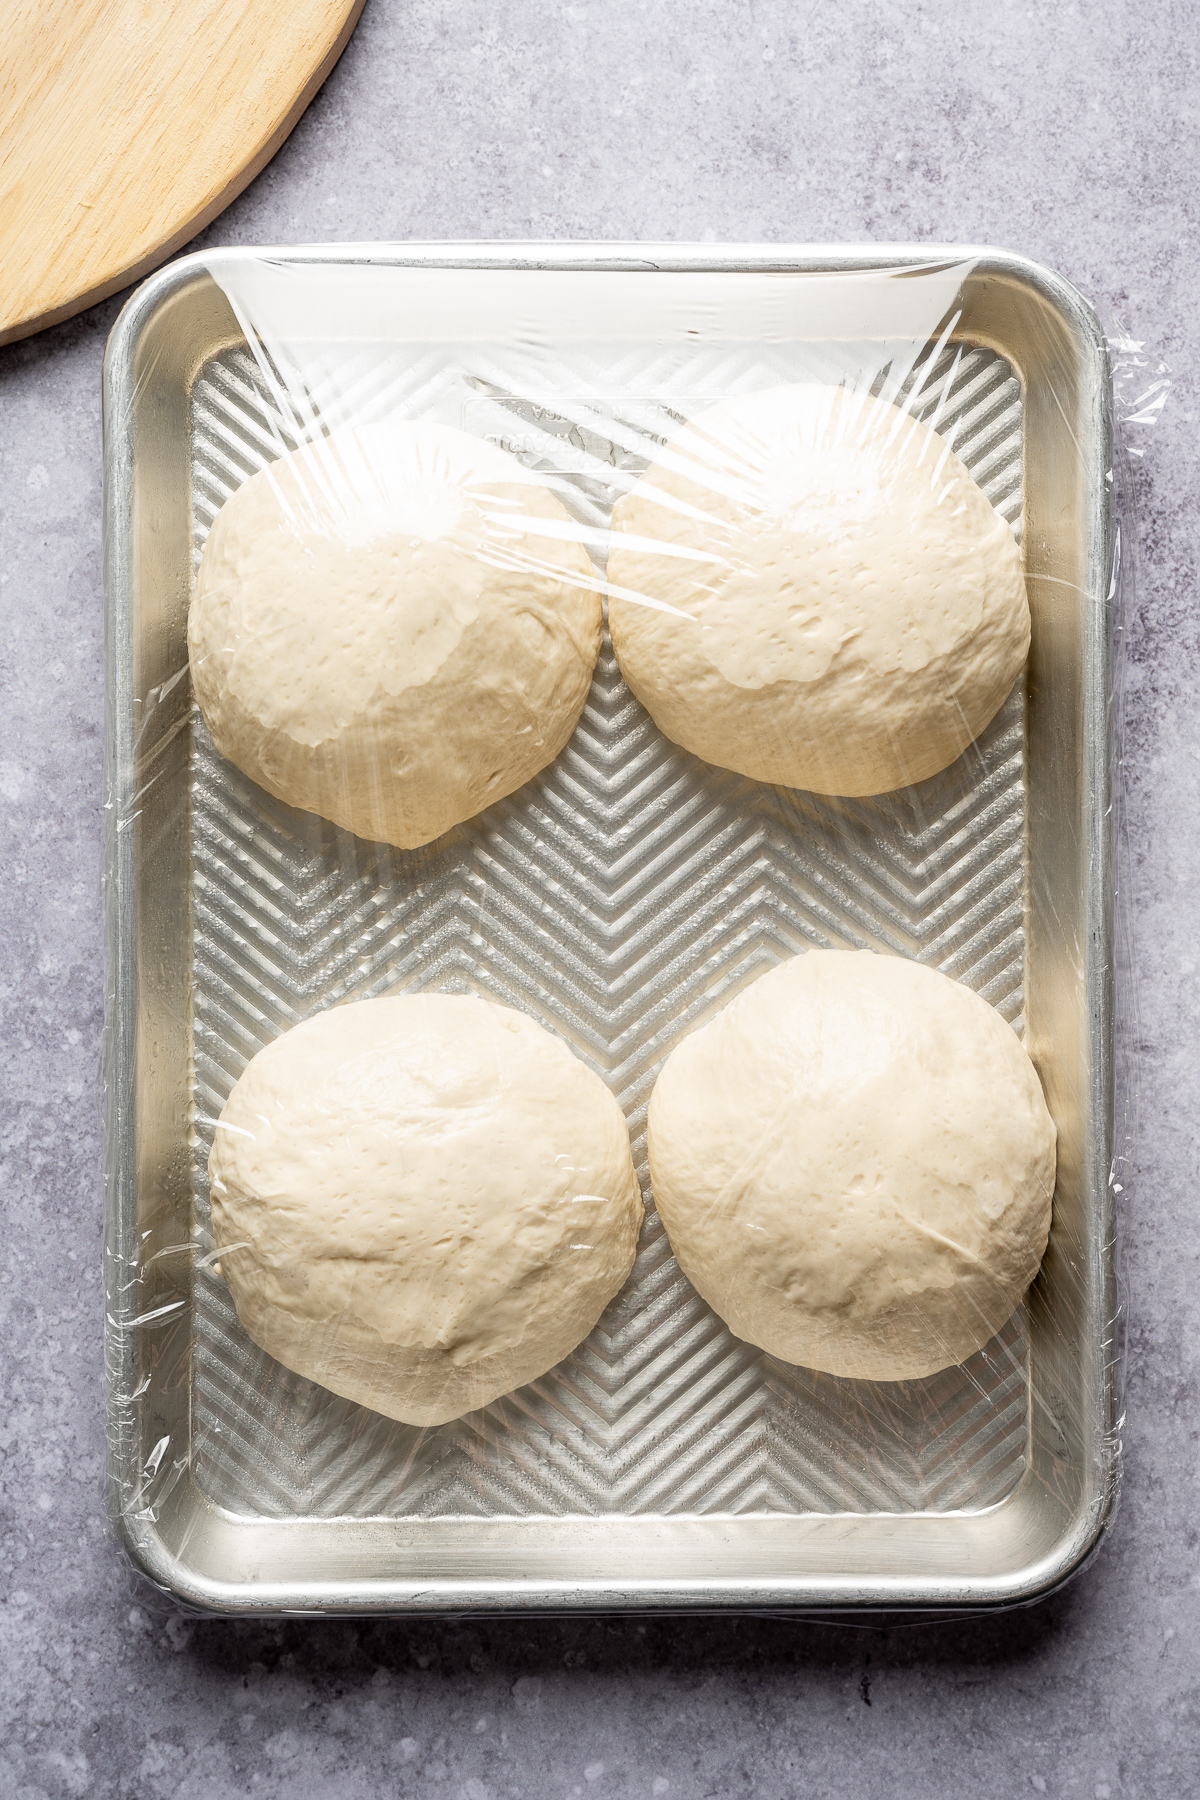 pizza dough balls on a tray